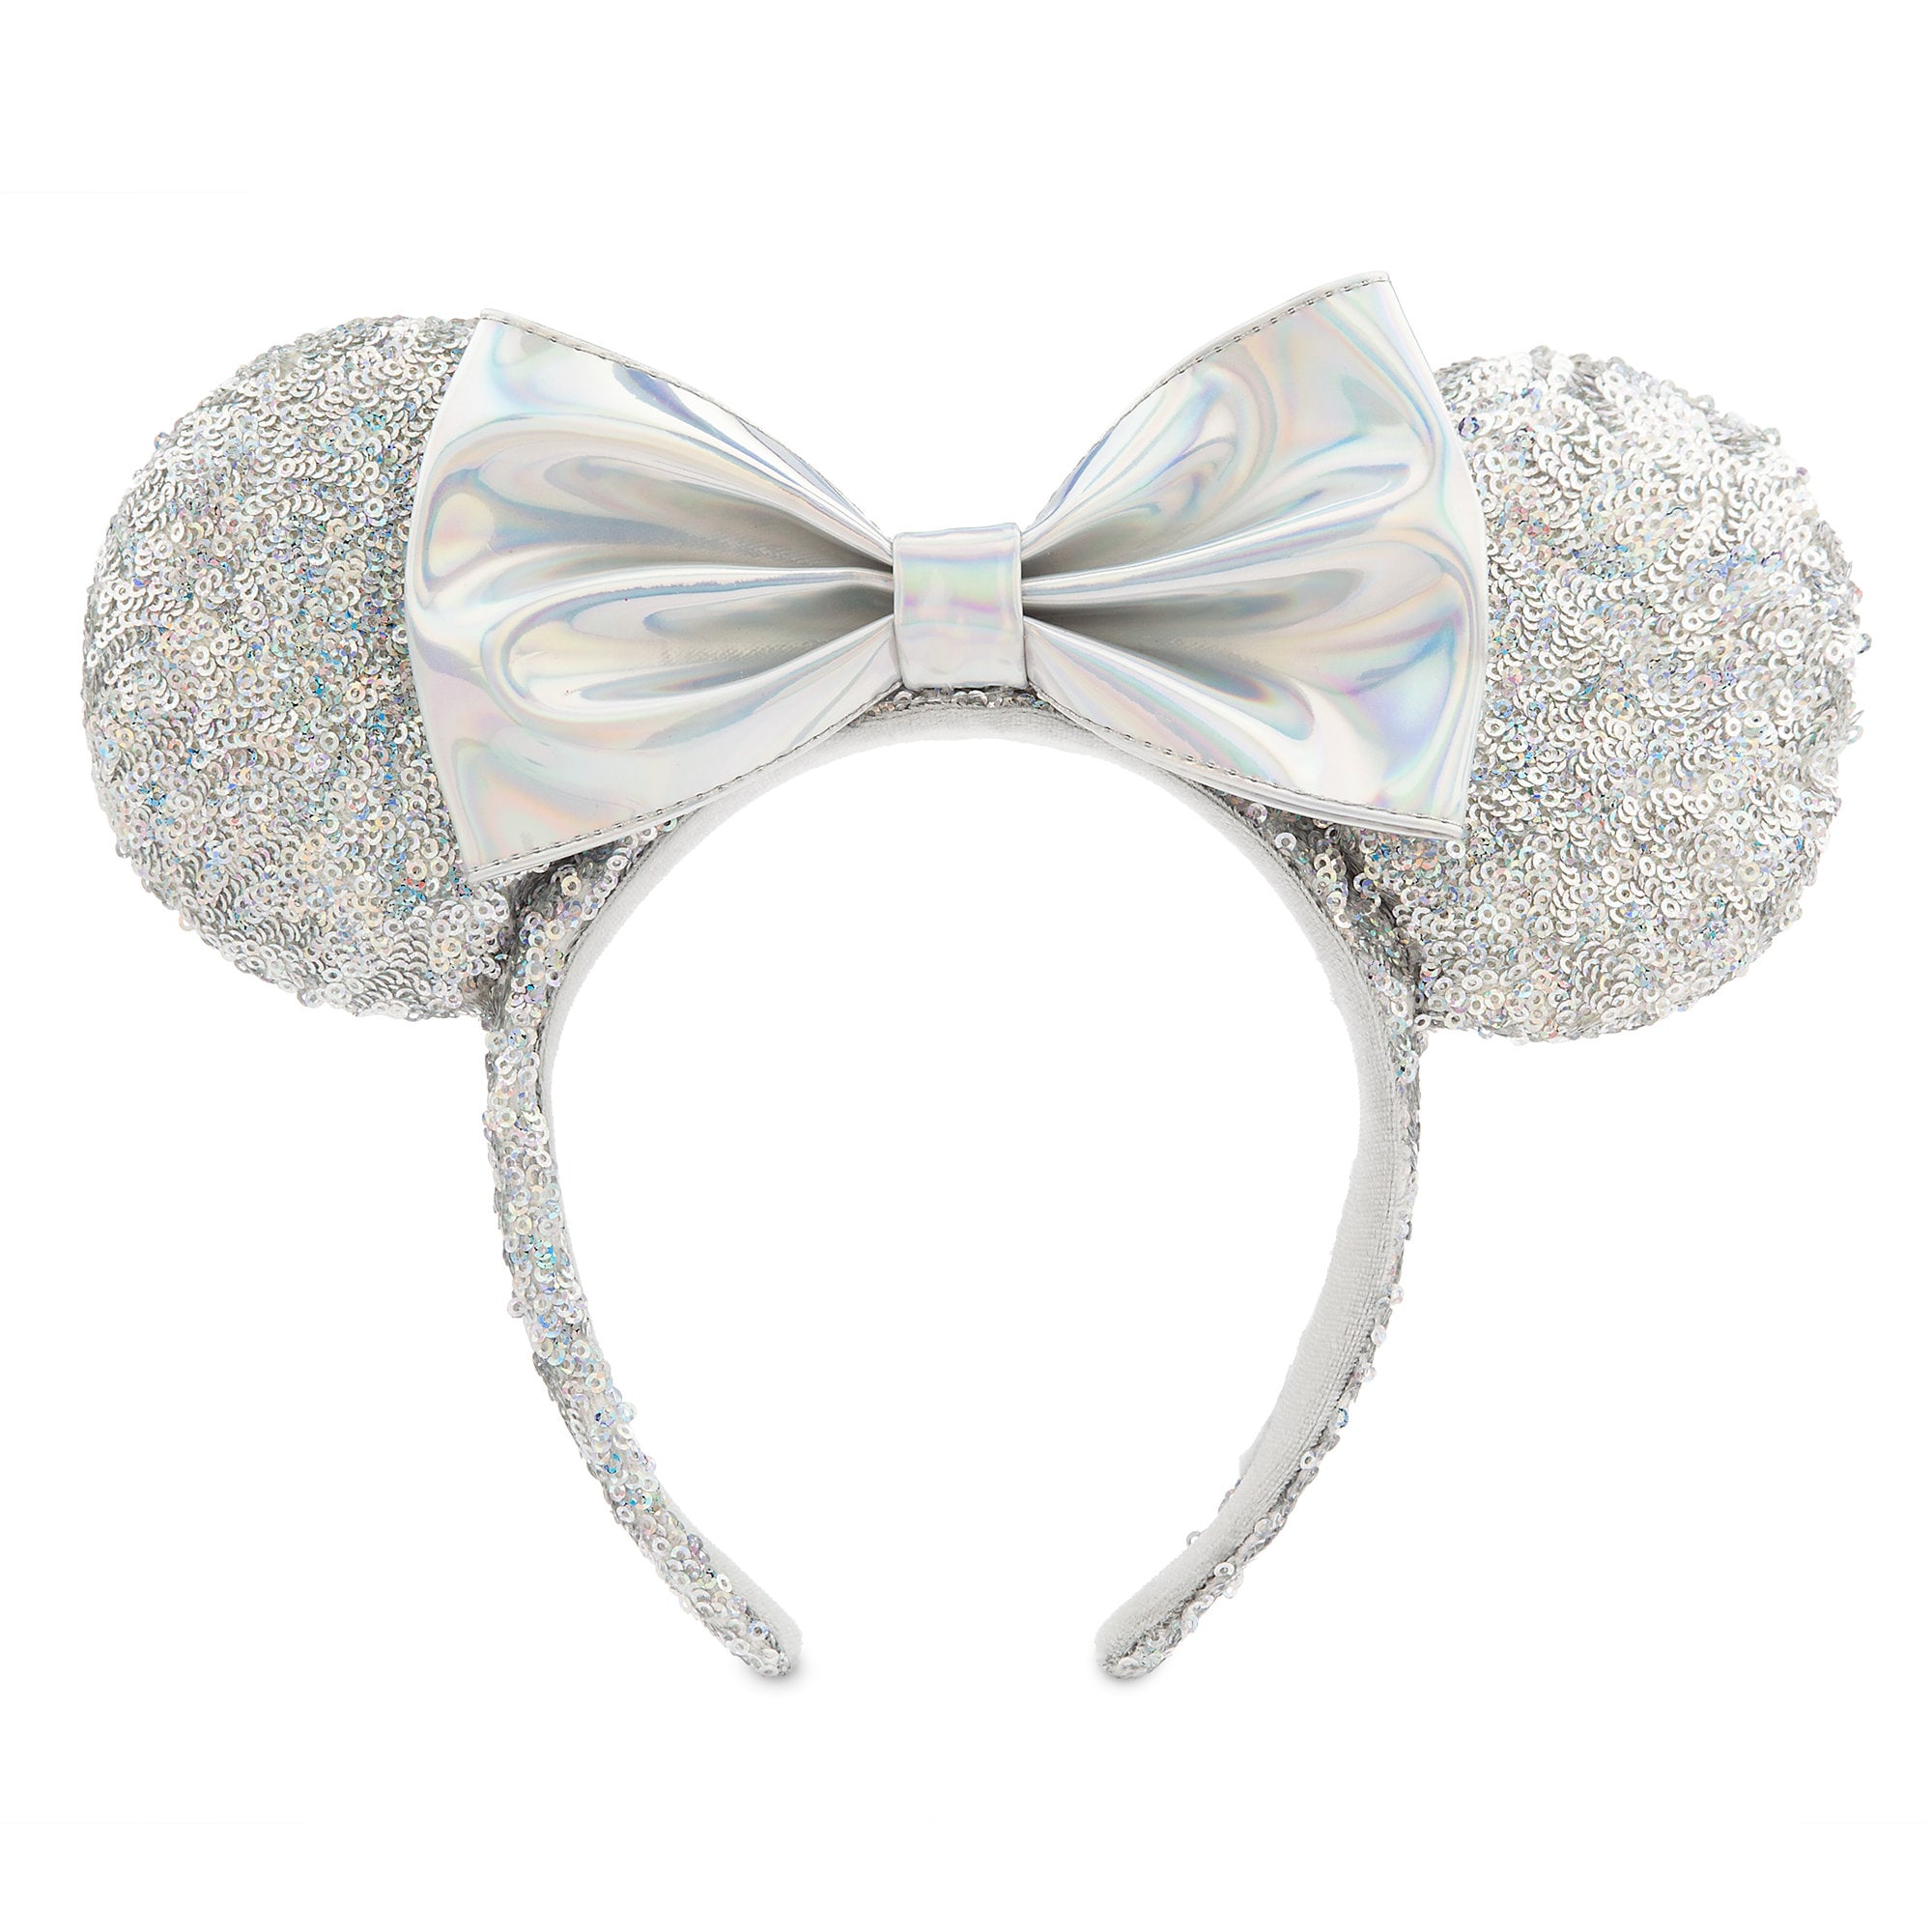 Minnie Mouse Sequined Ear Headband – Magic Mirror Metallic image